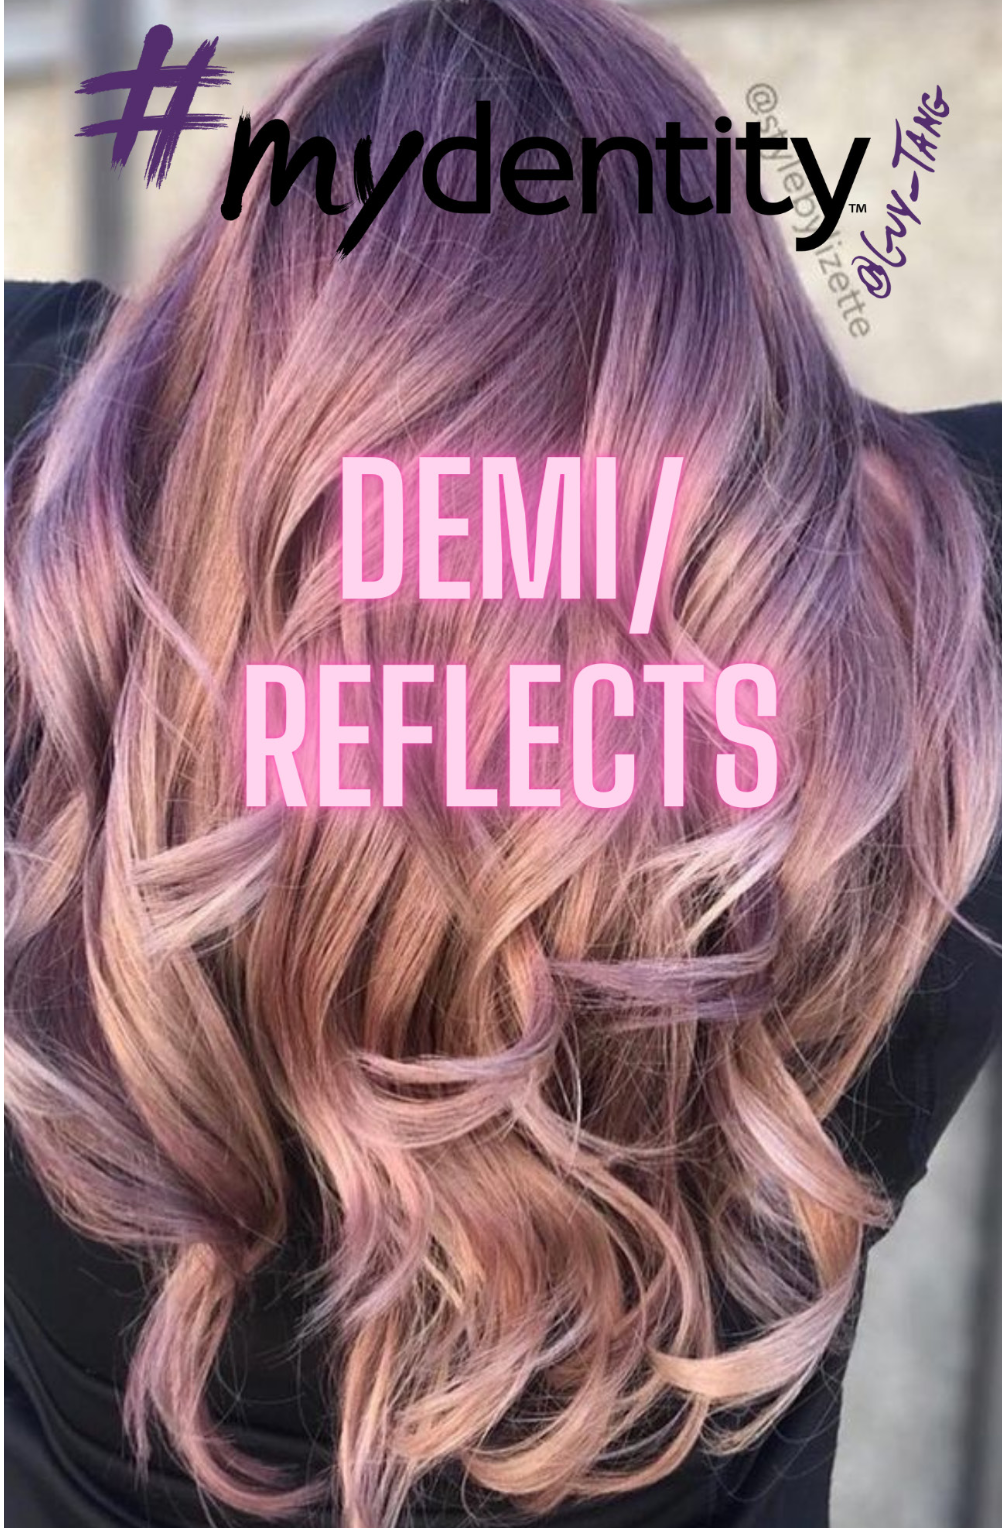 Mydentity Demi/Reflects